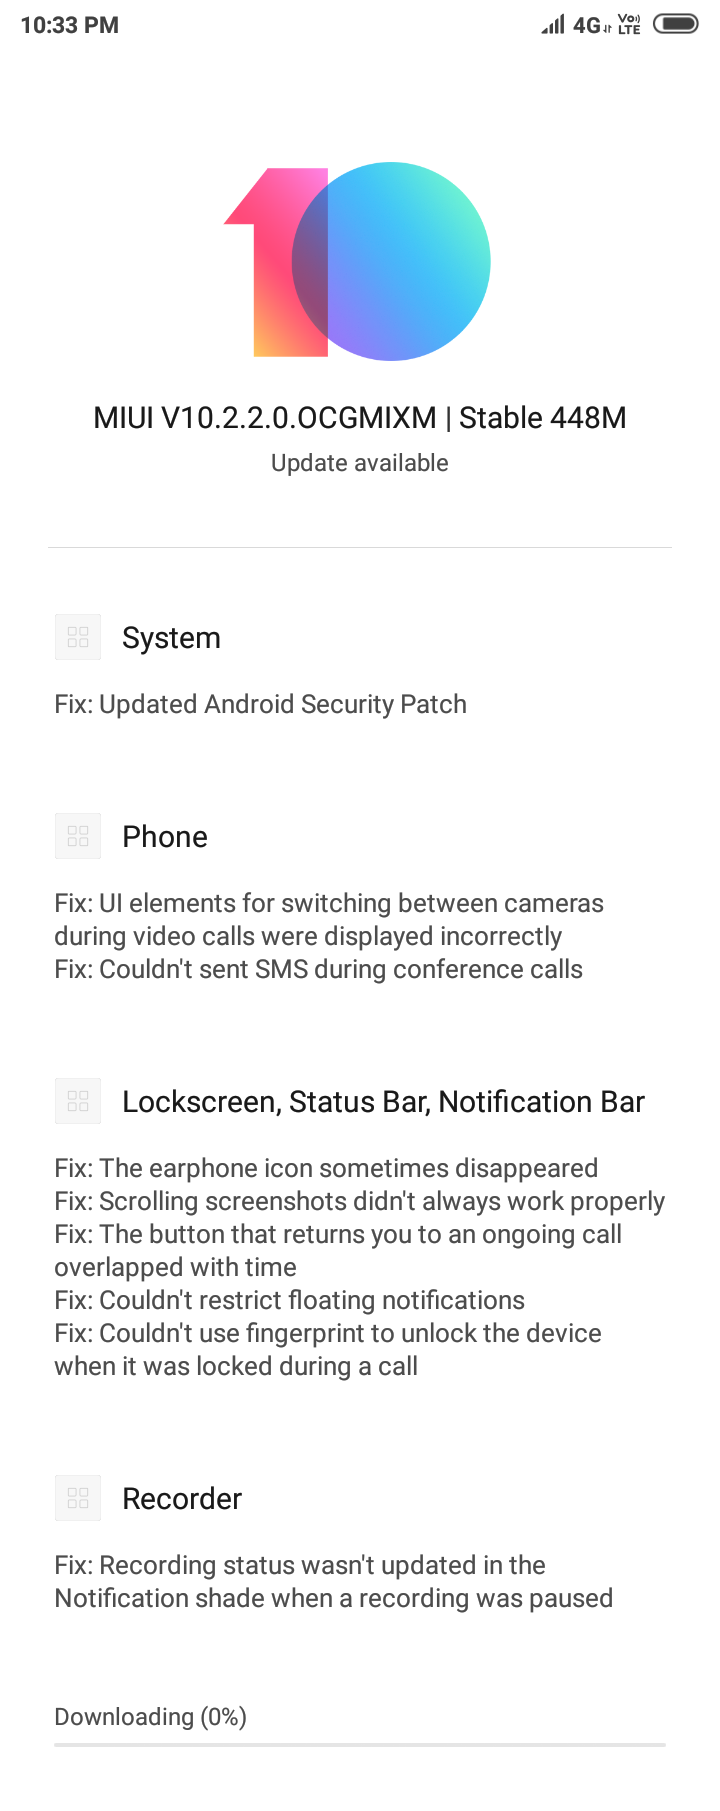 xiaomi redmi 6/6a receives miui 10.2.2 update with december security patch